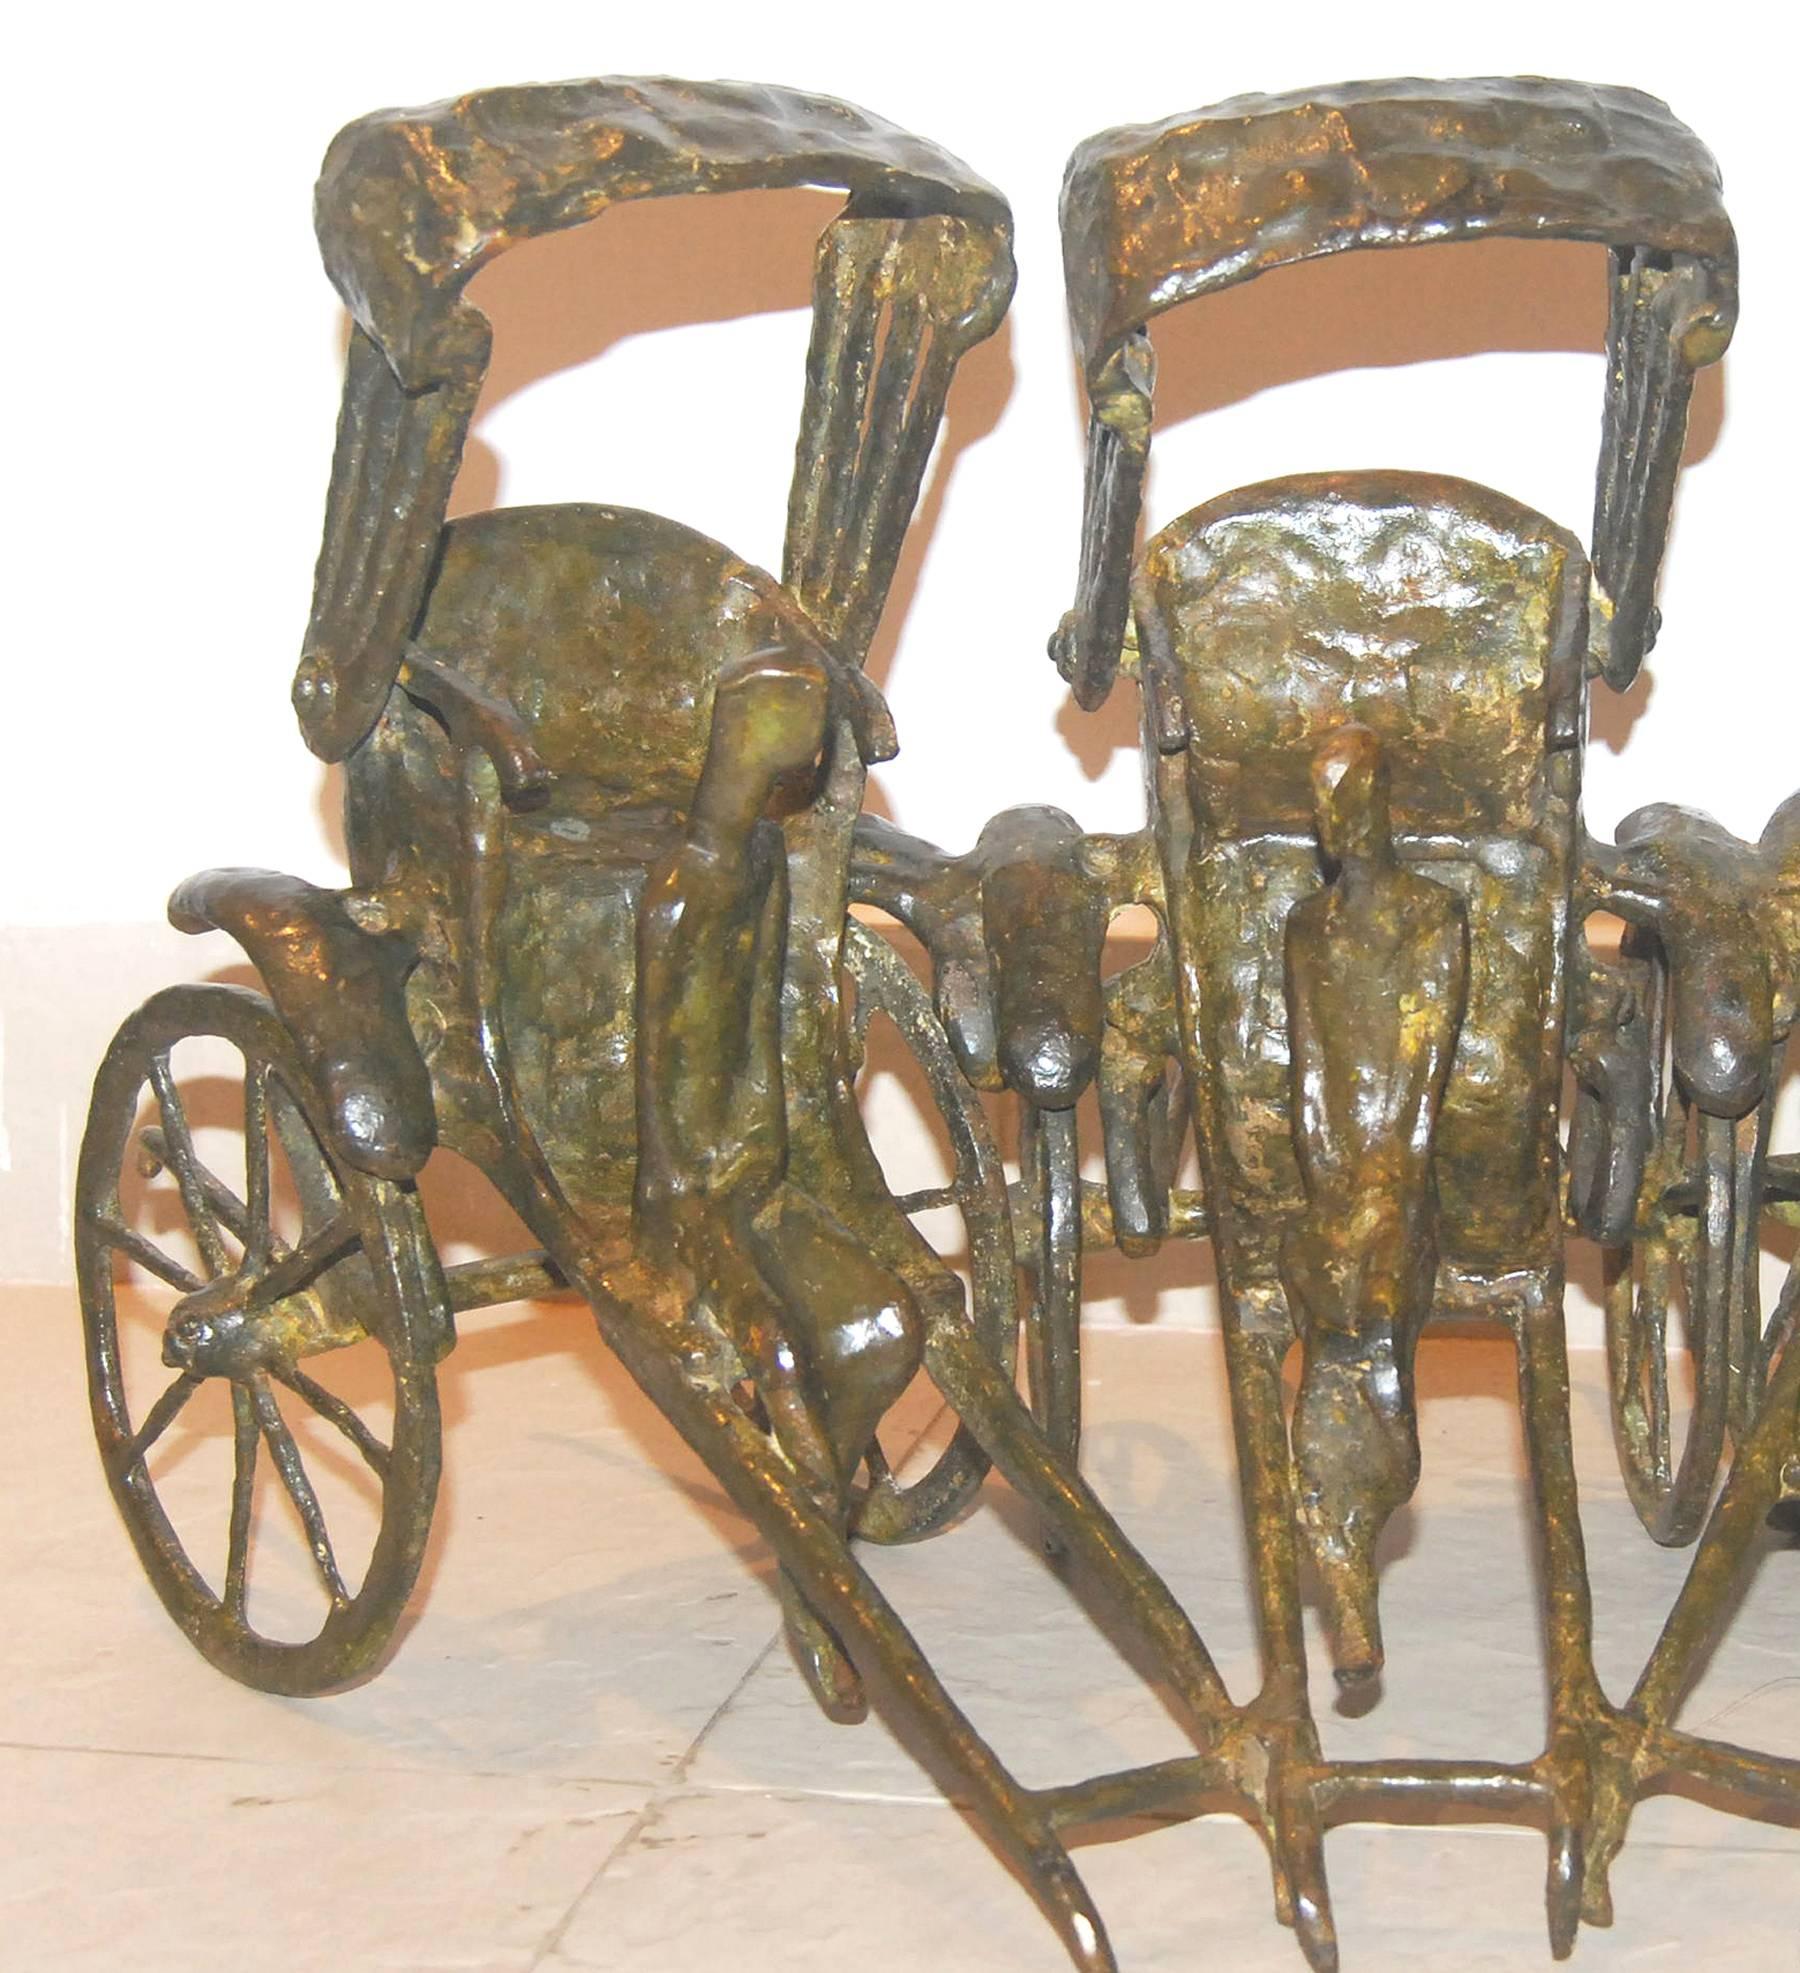 Rickshaw - Gold Figurative Sculpture by Tushar Kanti Das Roy